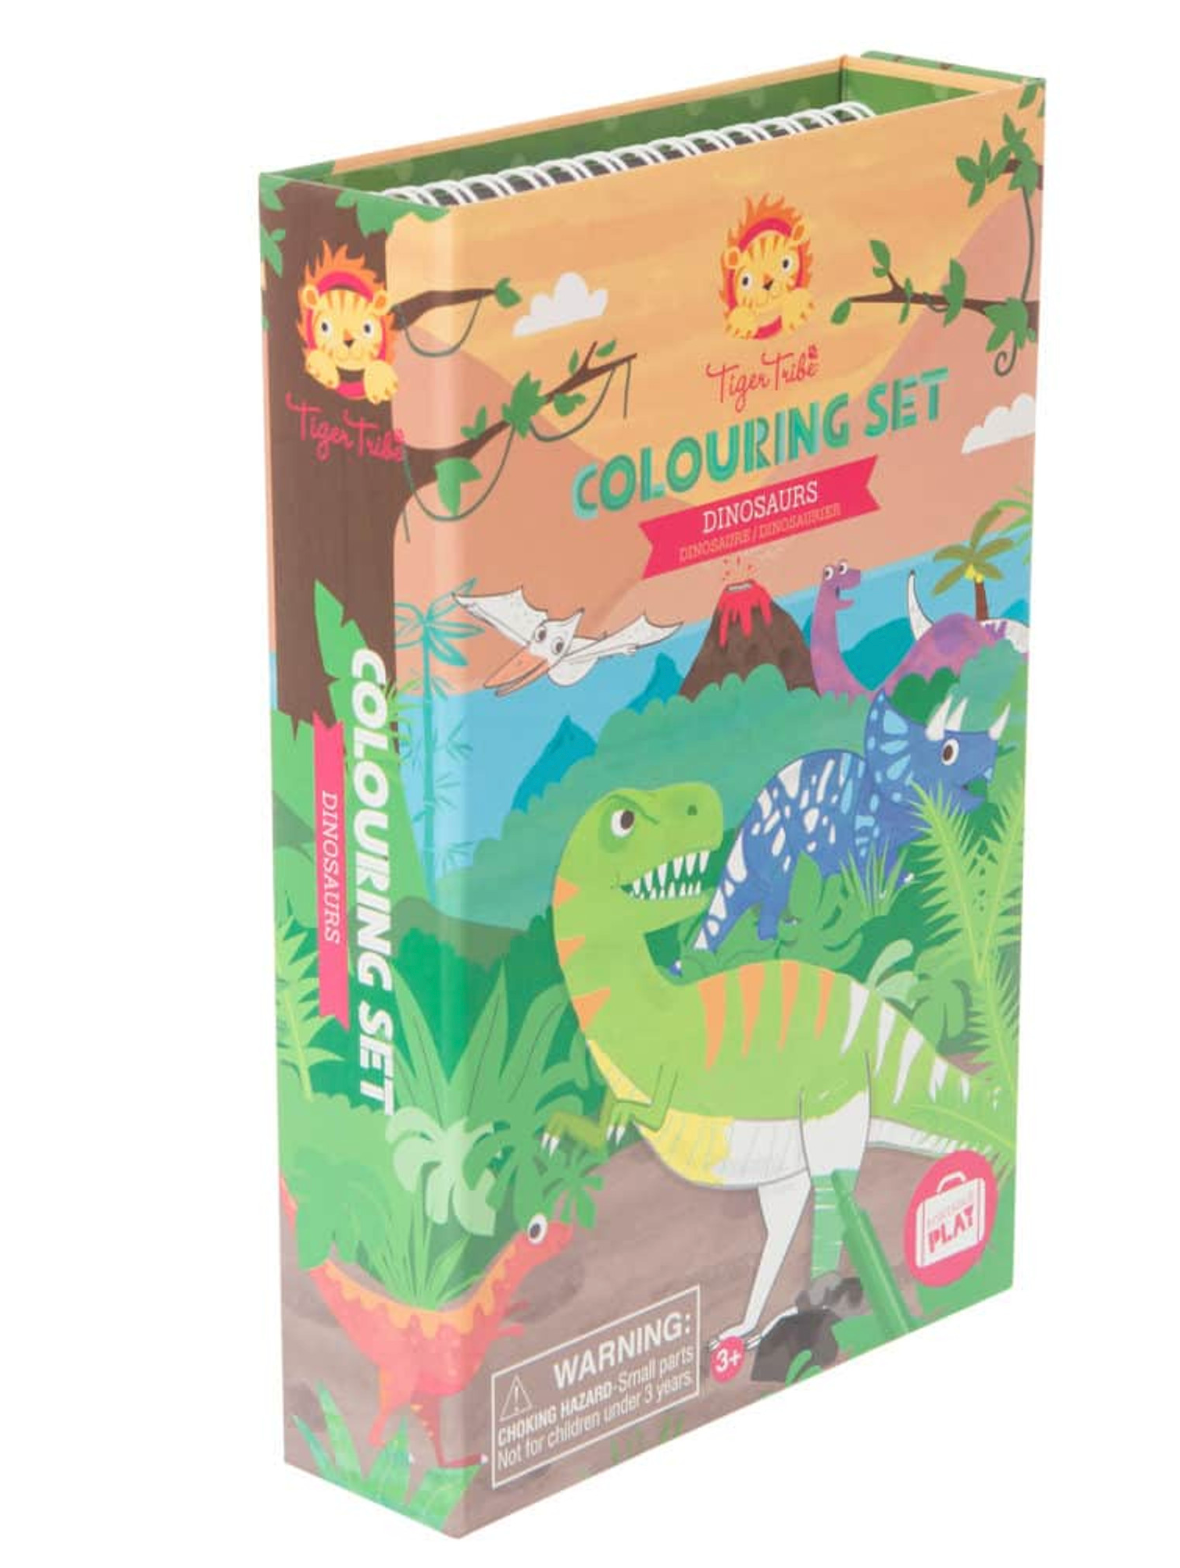 Coloring Set - Dinosaurs